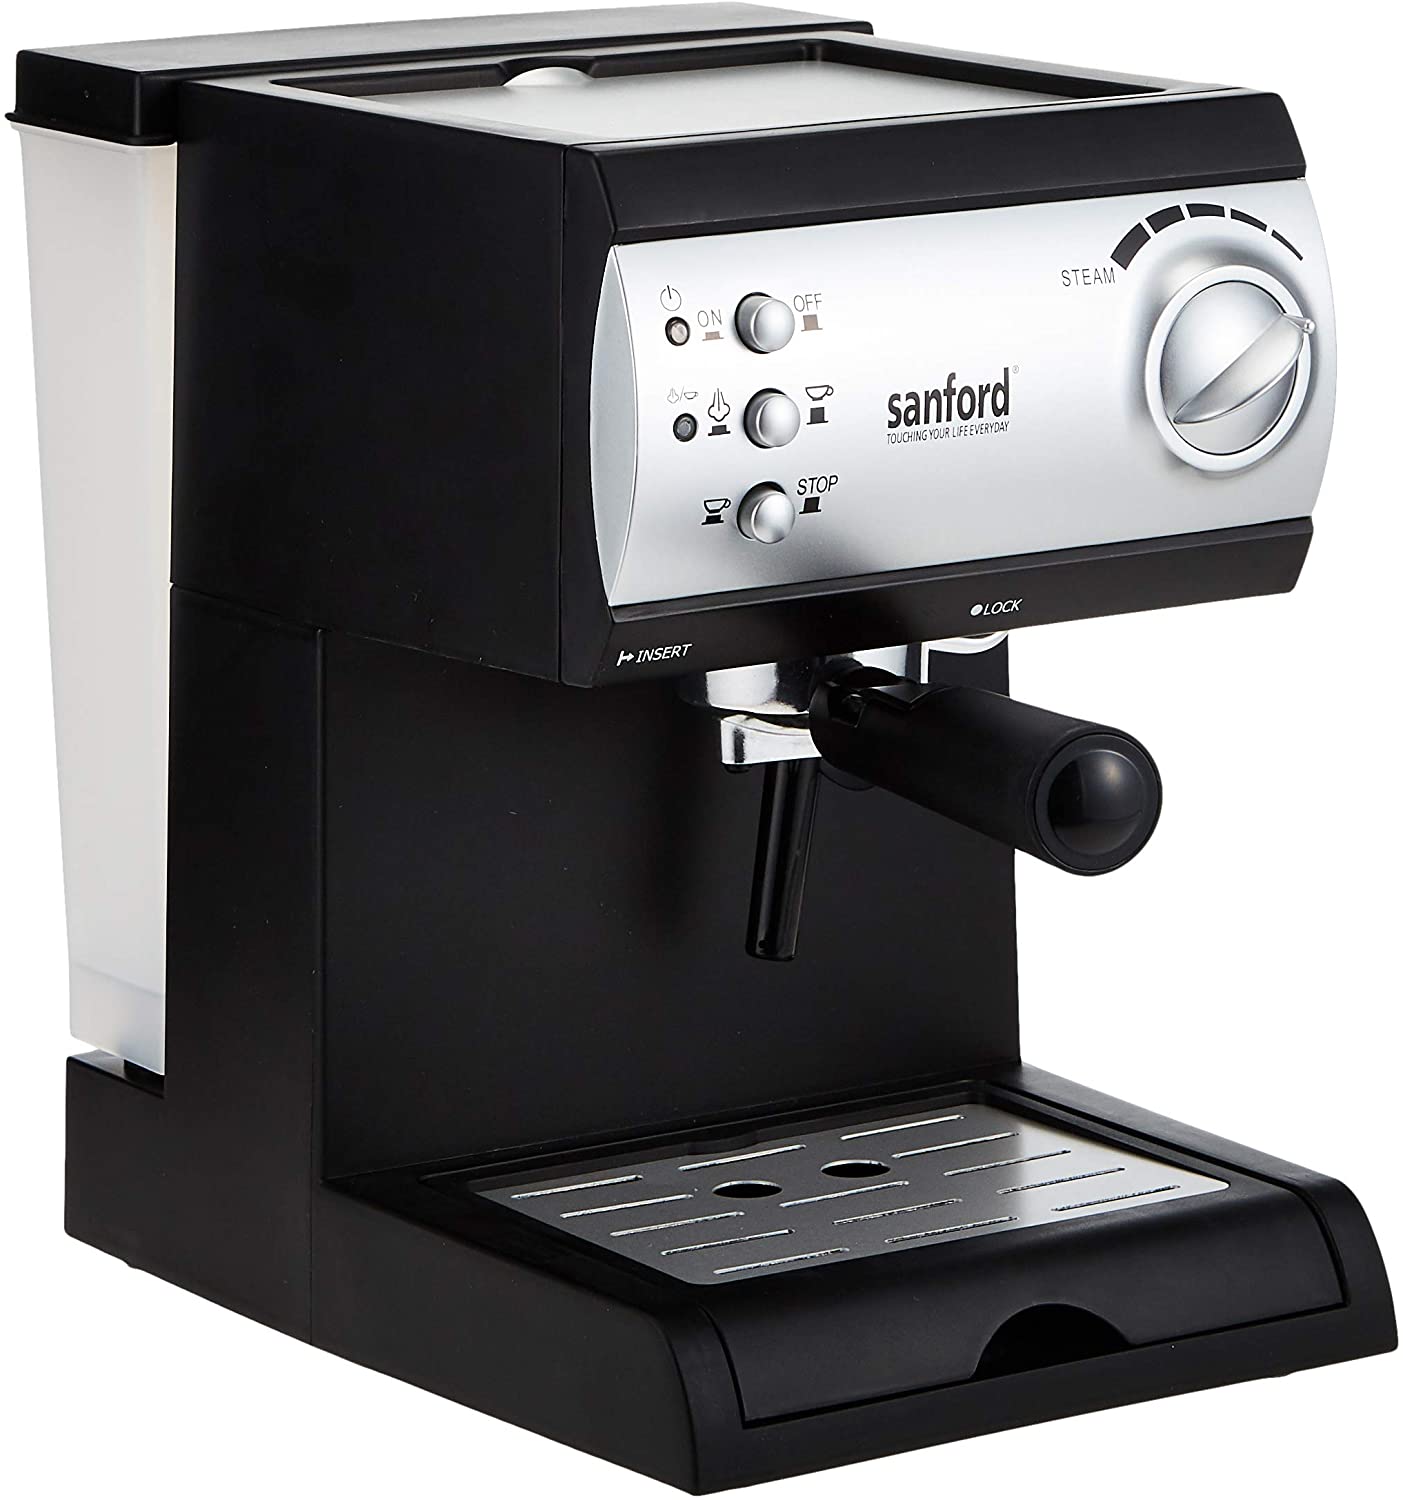 Sanford Espresso Coffee Machine 950W Black SF1399ECM BS